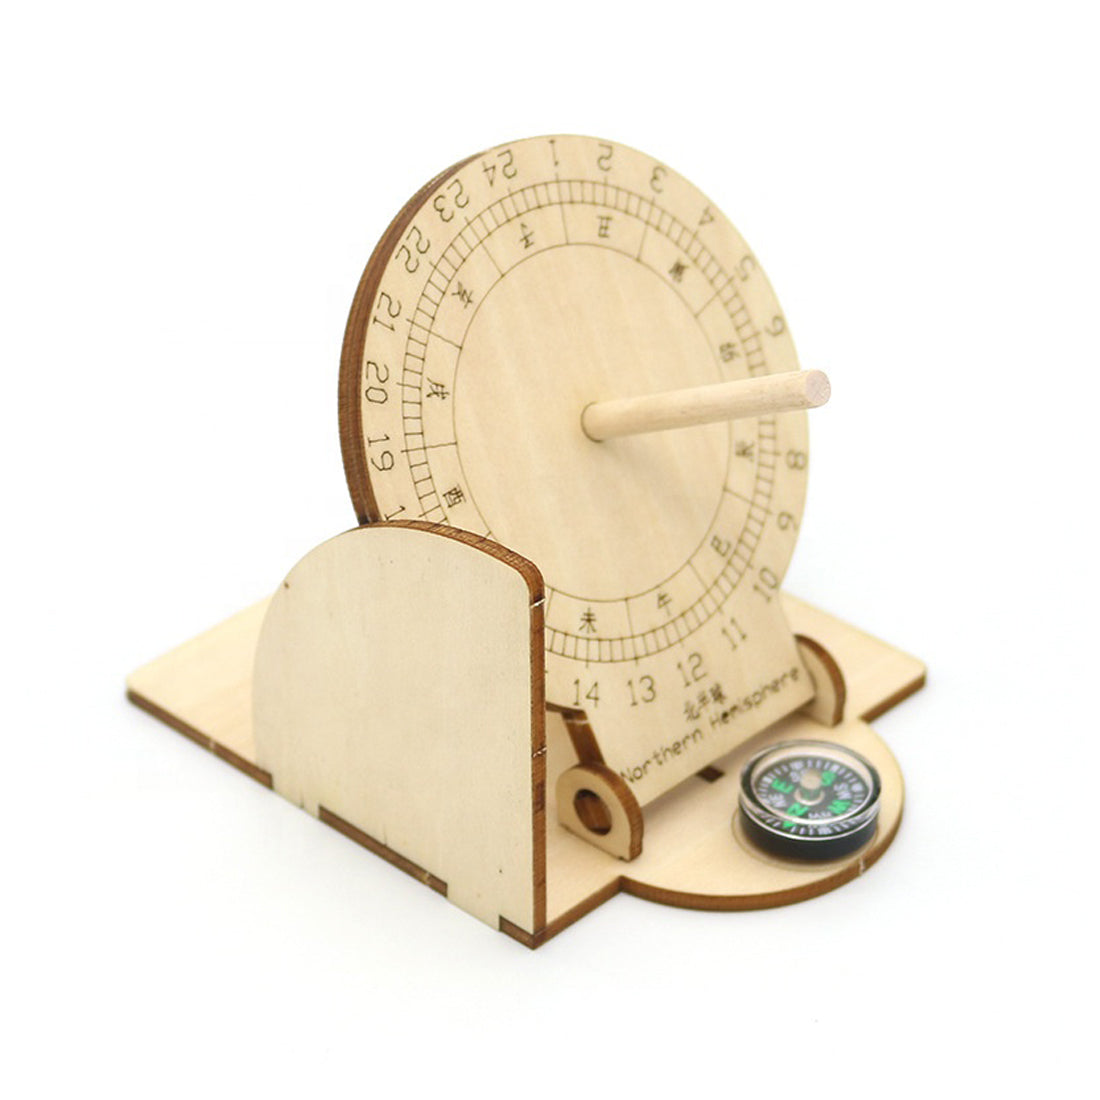 diy-stem-craft-compass-sundial-science-educational-toy.jpg